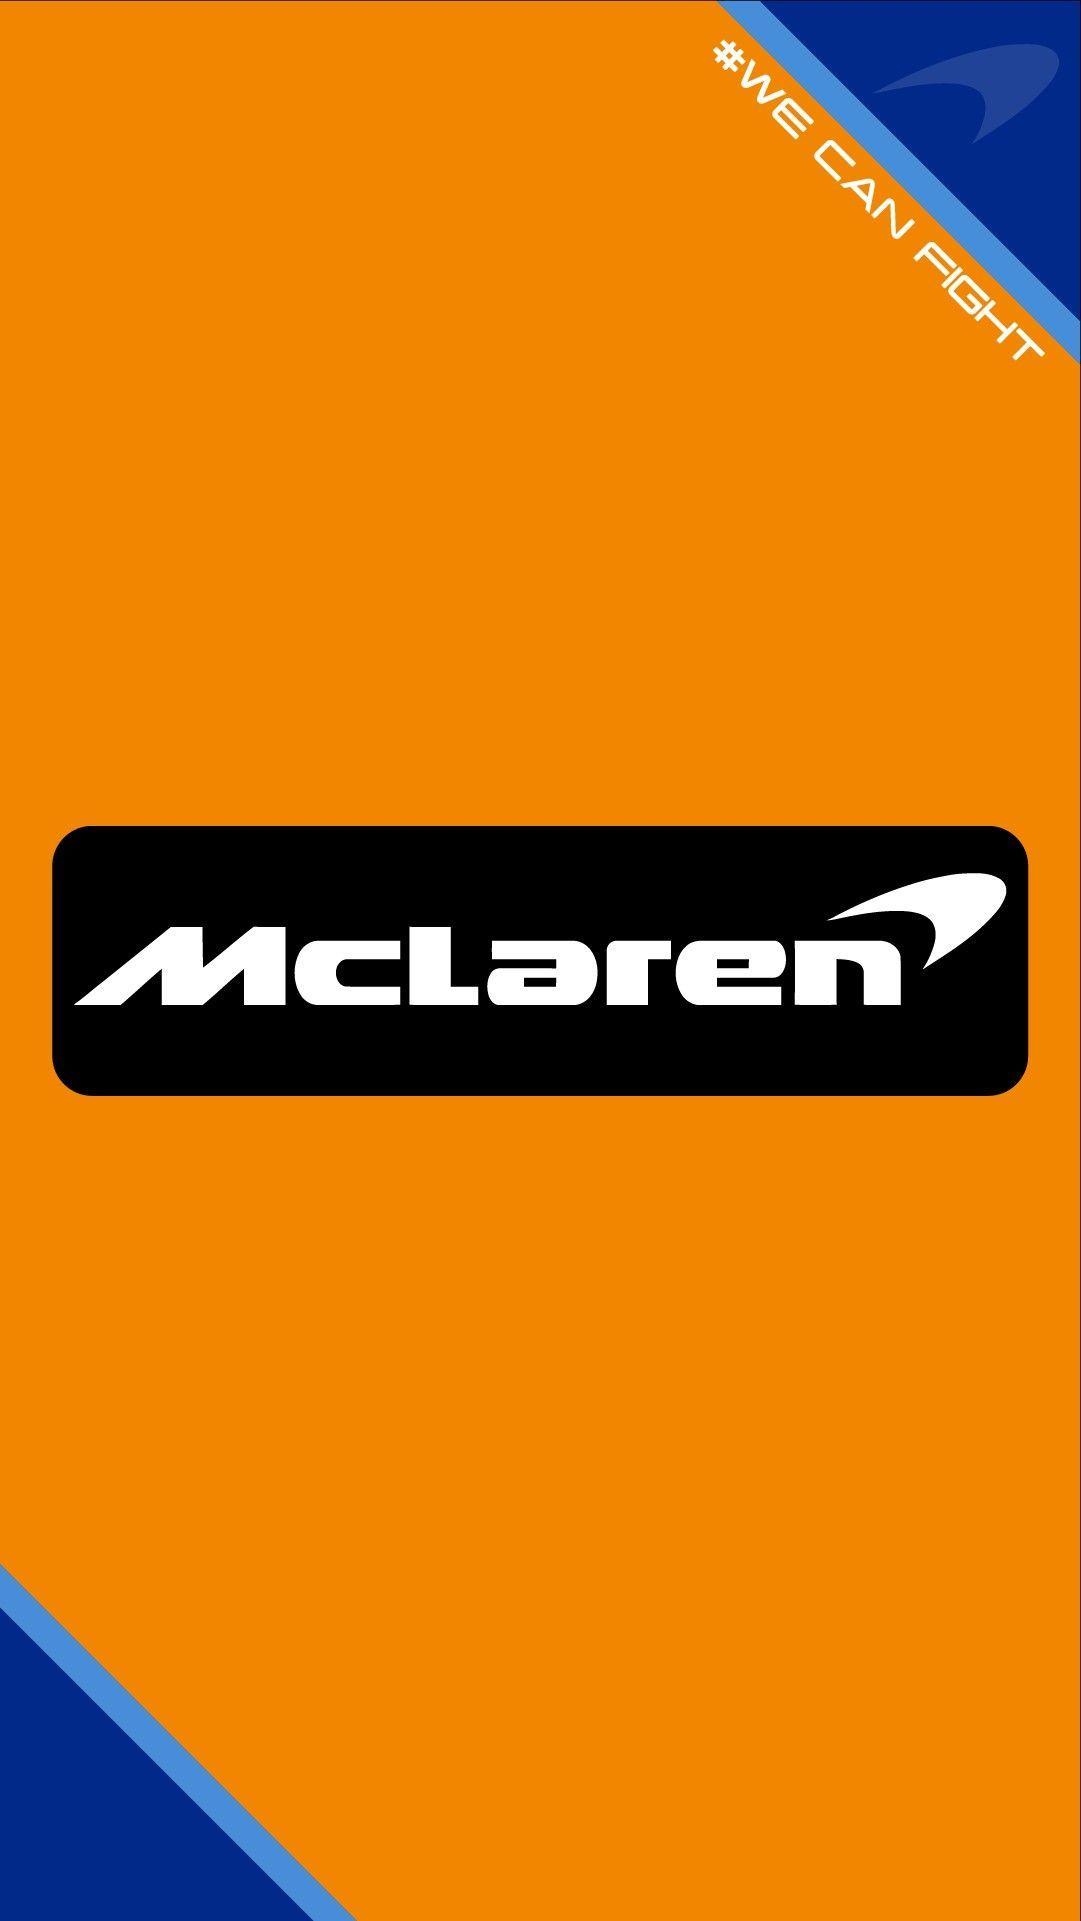 McLaren F1 Logo - Mclaren f1 team wallpaper 2018 #mclaren #formula1 #f1 #renault ...